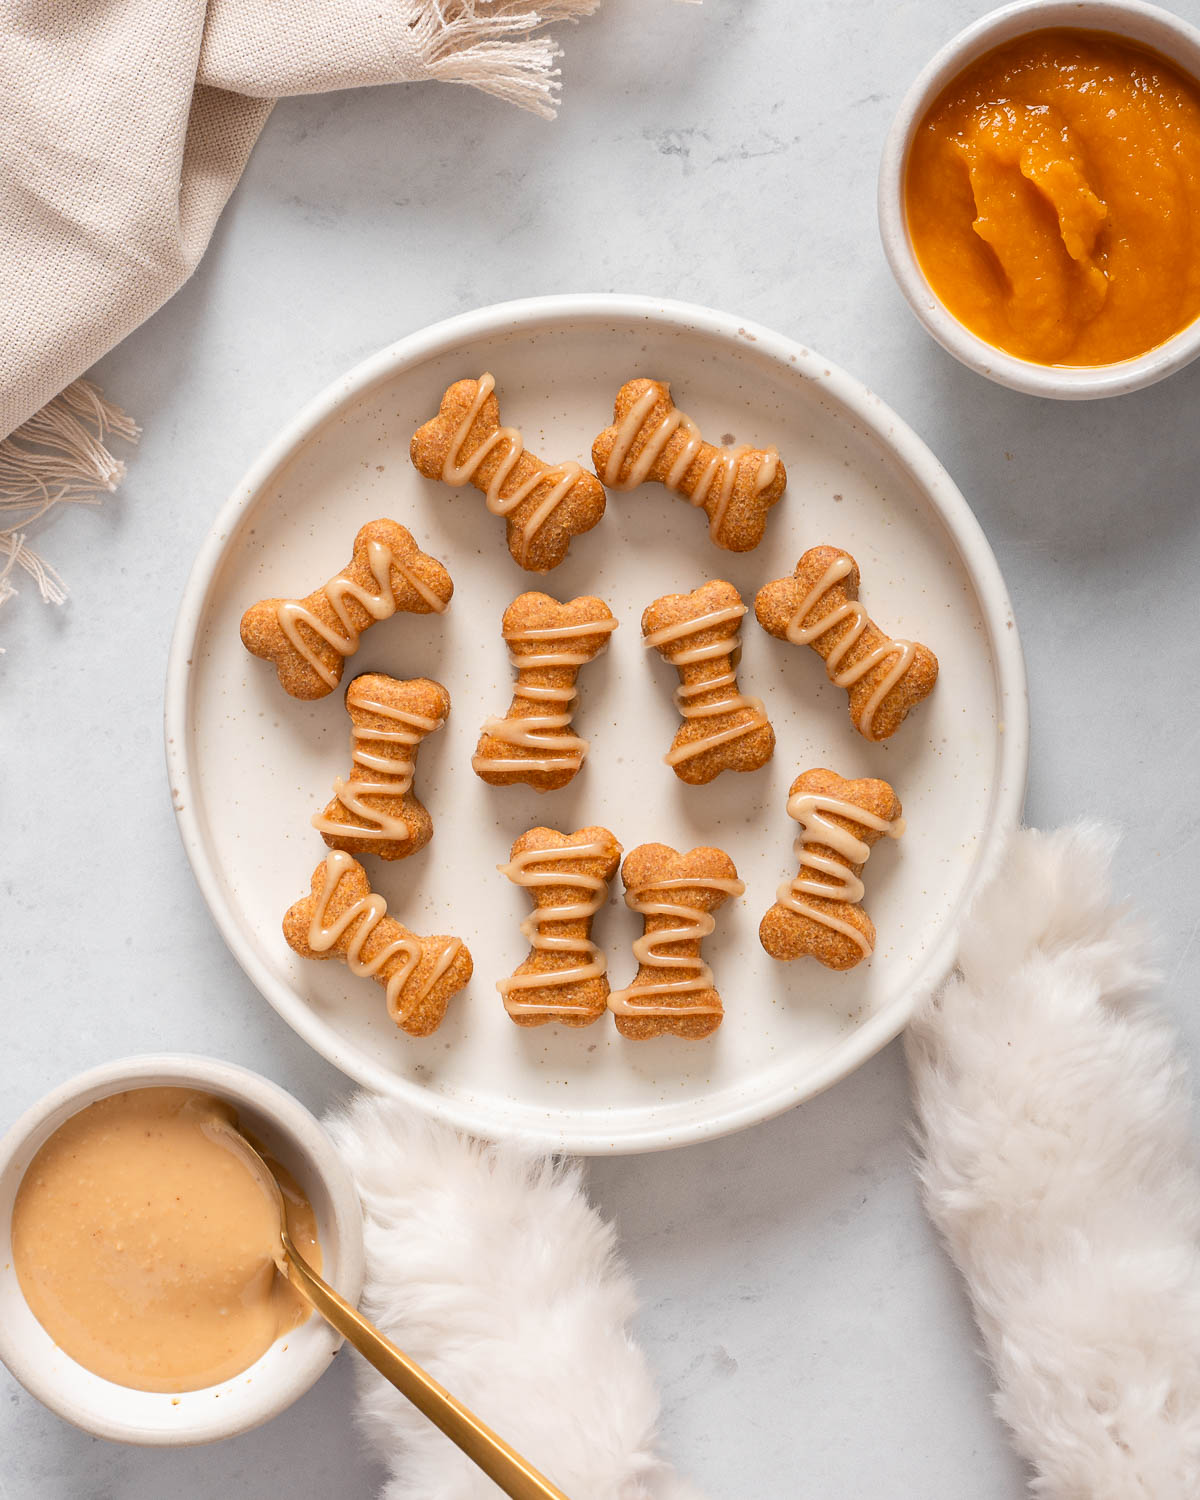 Looking down at a plate of homemade pumpkin peanut butter dog treats.